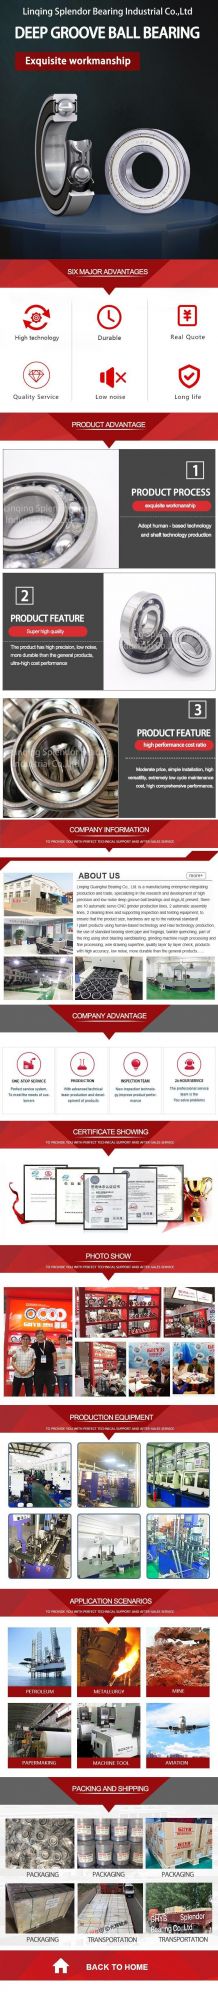 China Factory Distributor Supplier of Deep Groove Ball Bearings for Motors, Compressors, Alternators 6315-2rz/P6/Z2V2